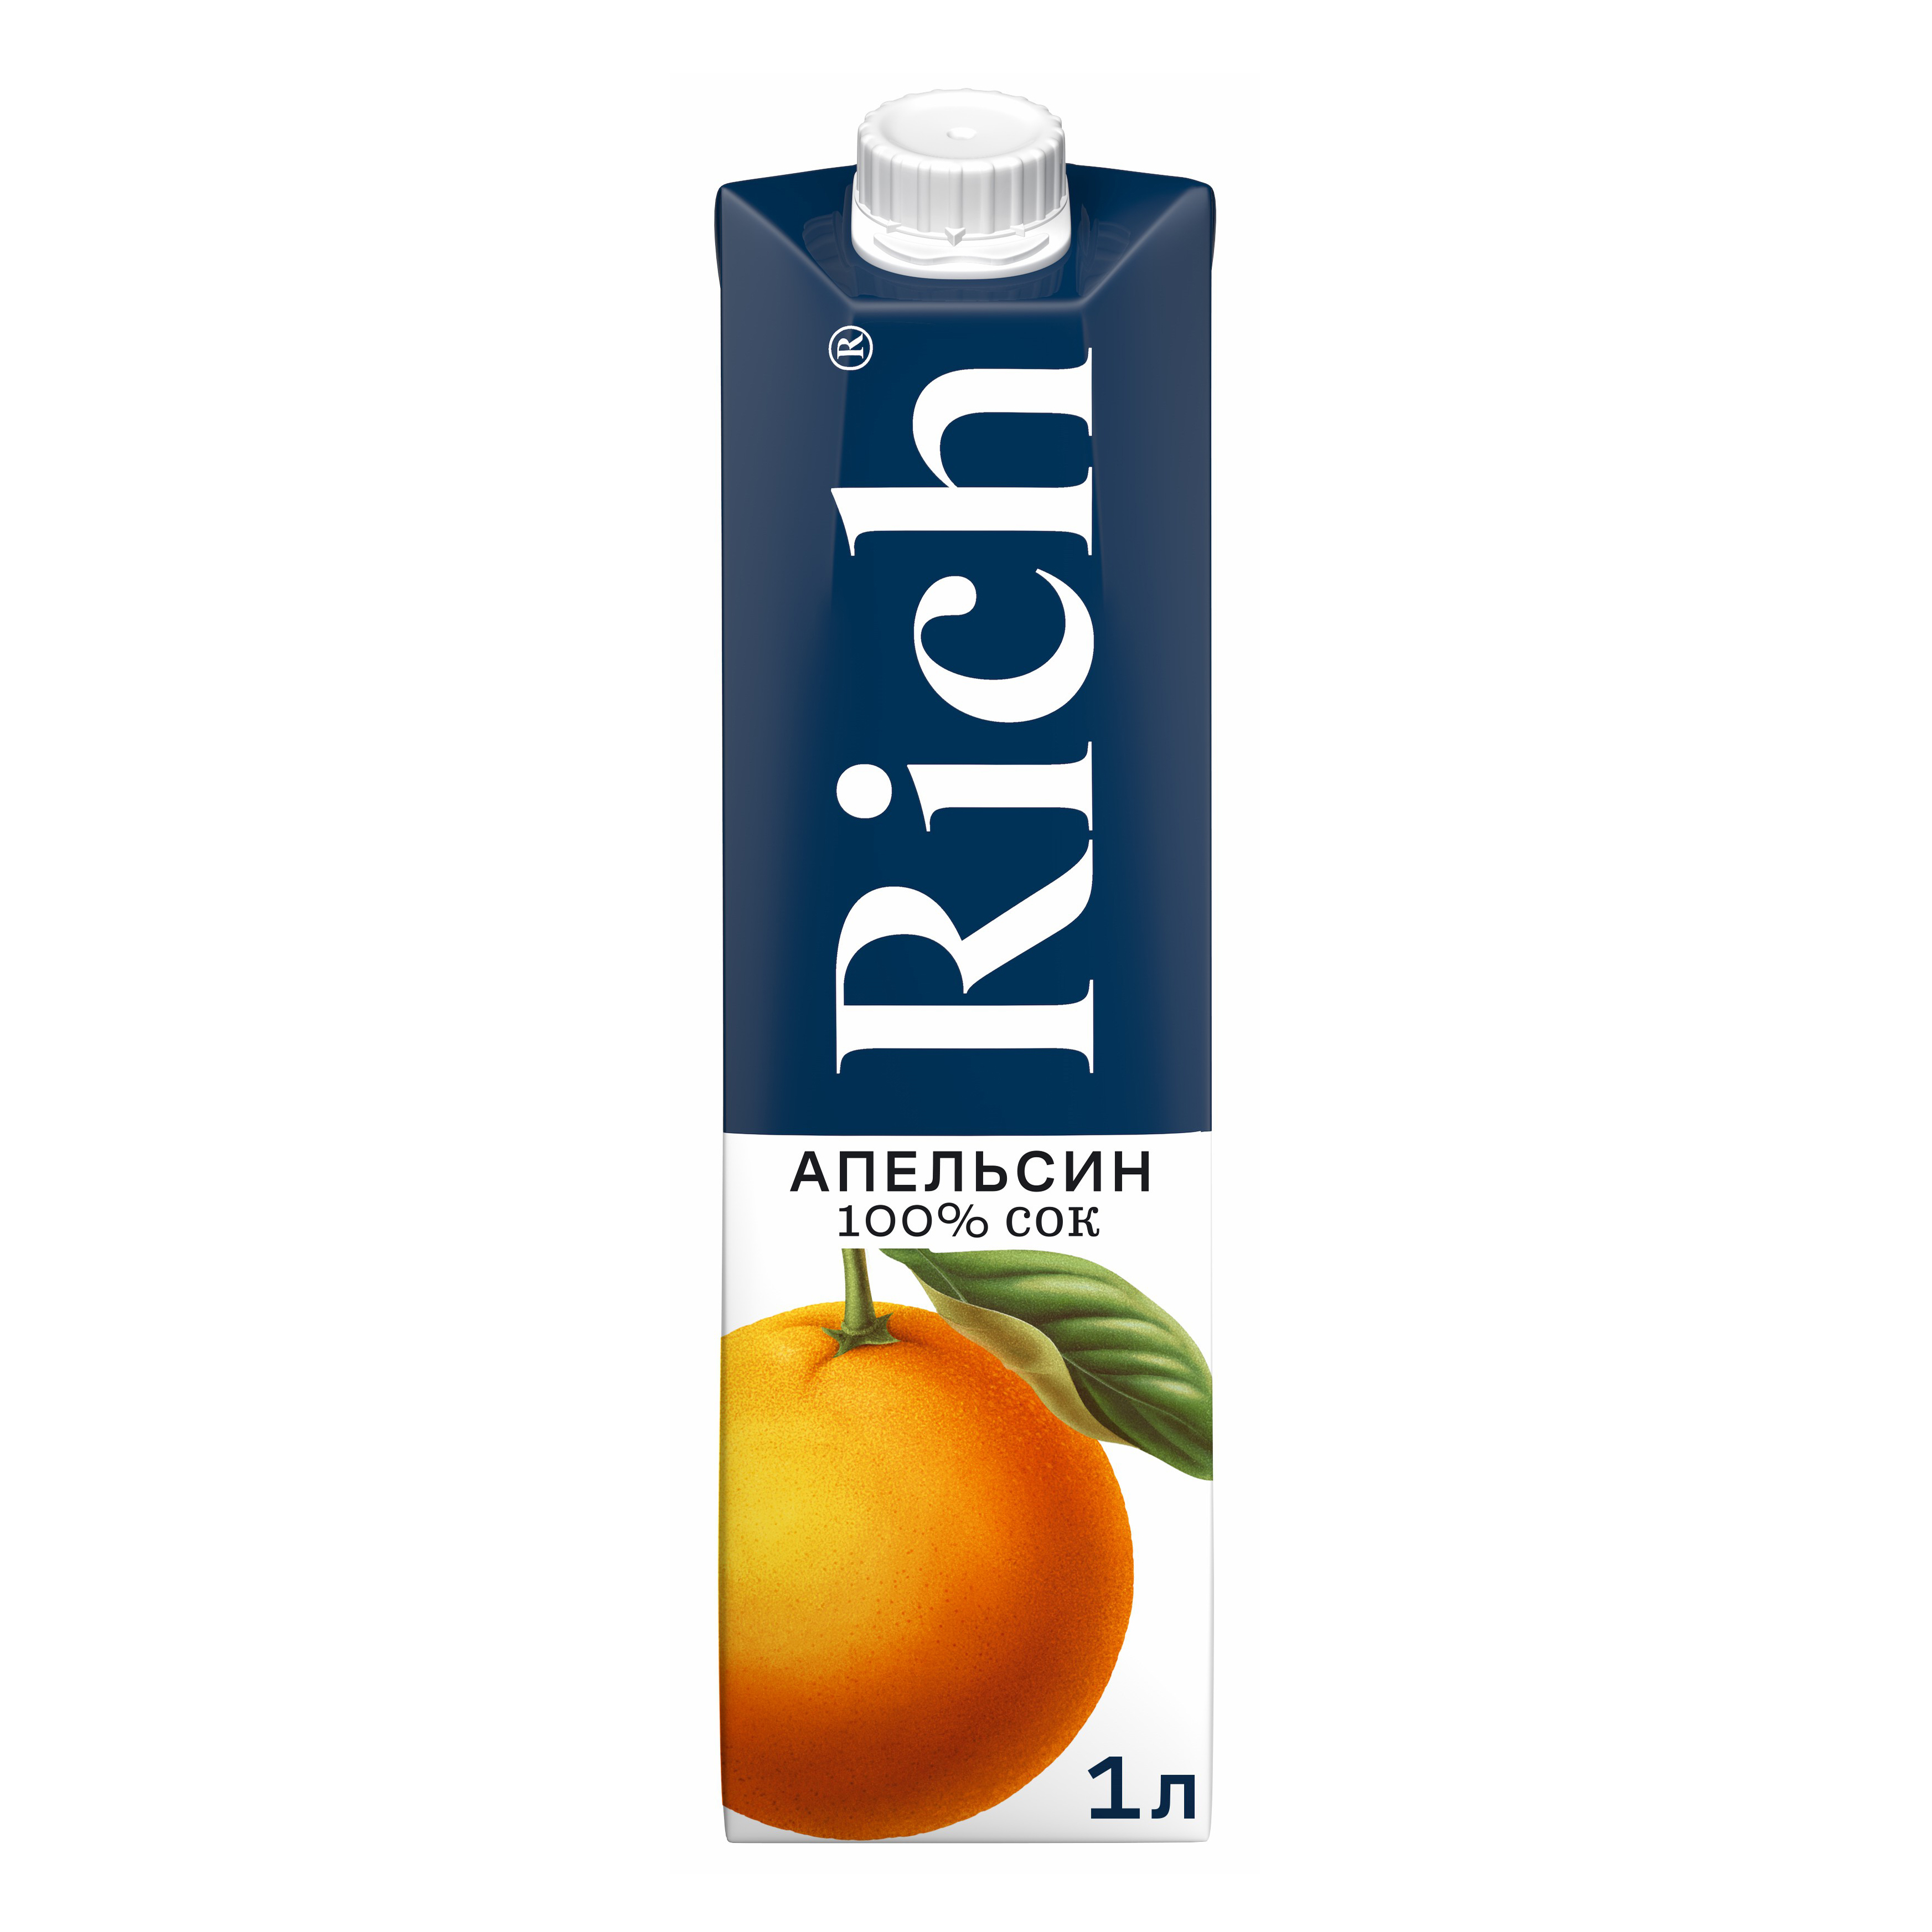 Рич бренд. Сок Rich манго апельсин. Нектар Рич манго-апельсин 1л. Сок Rich томат 1л. Нектар Rich апельсин манго 1л.